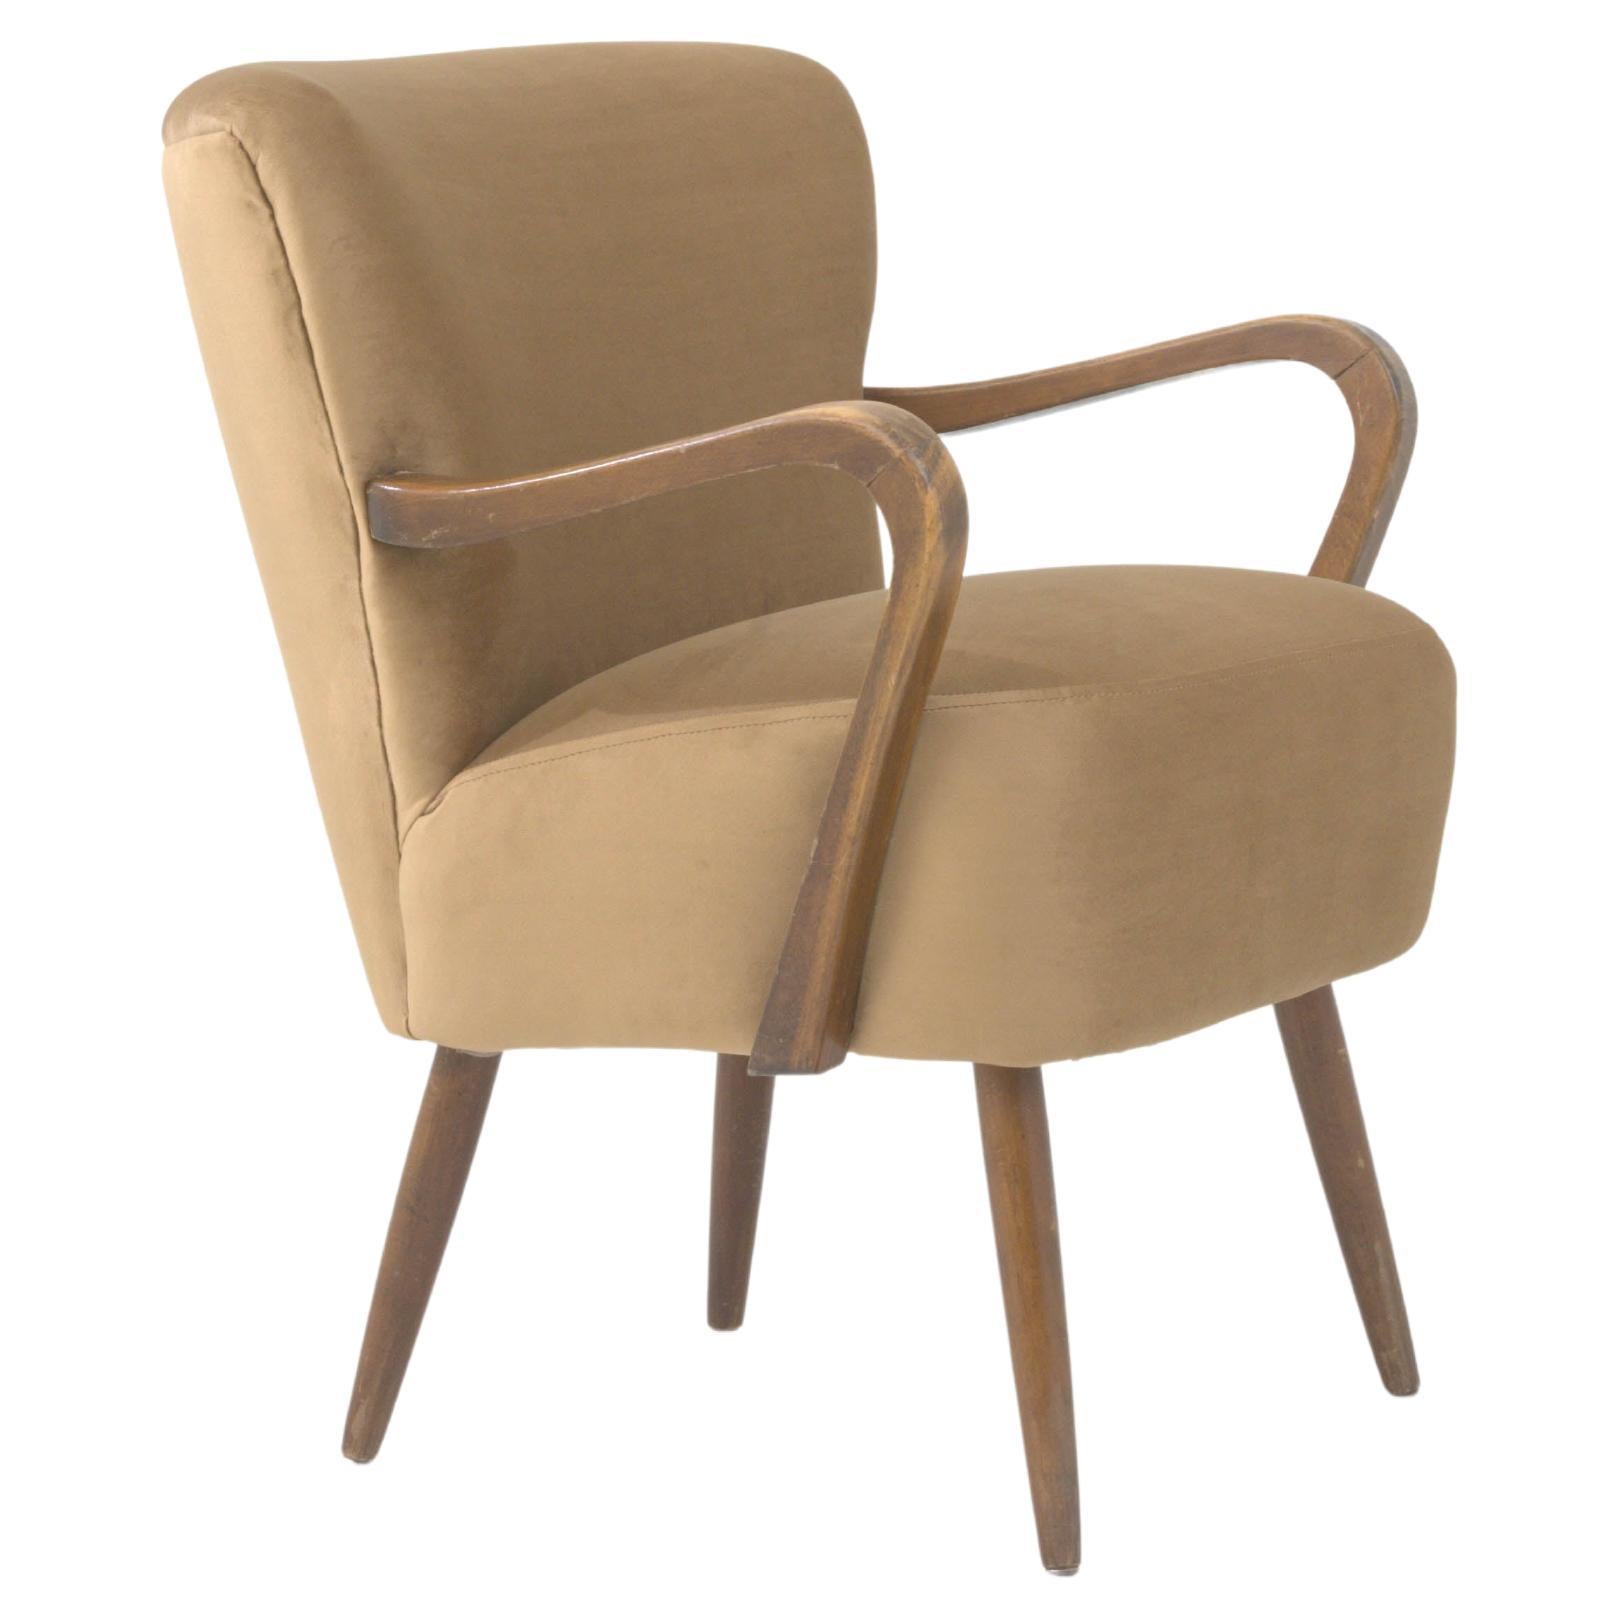 20th Century Danish Upholstered Armchair